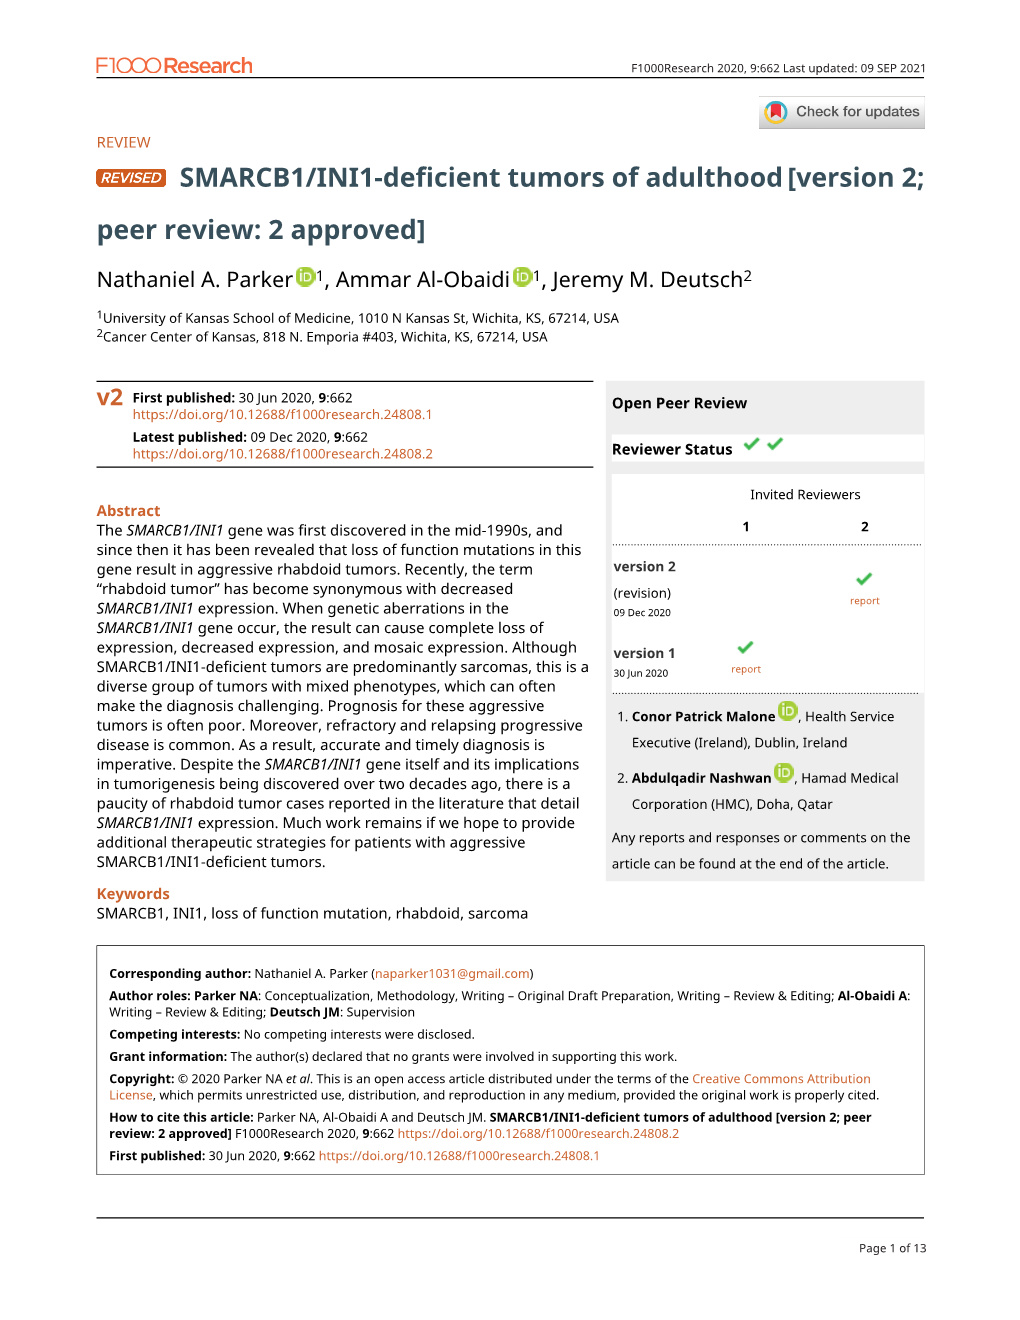 SMARCB1/INI1-Deficient Tumors of Adulthood[Version 2; Peer Review: 2